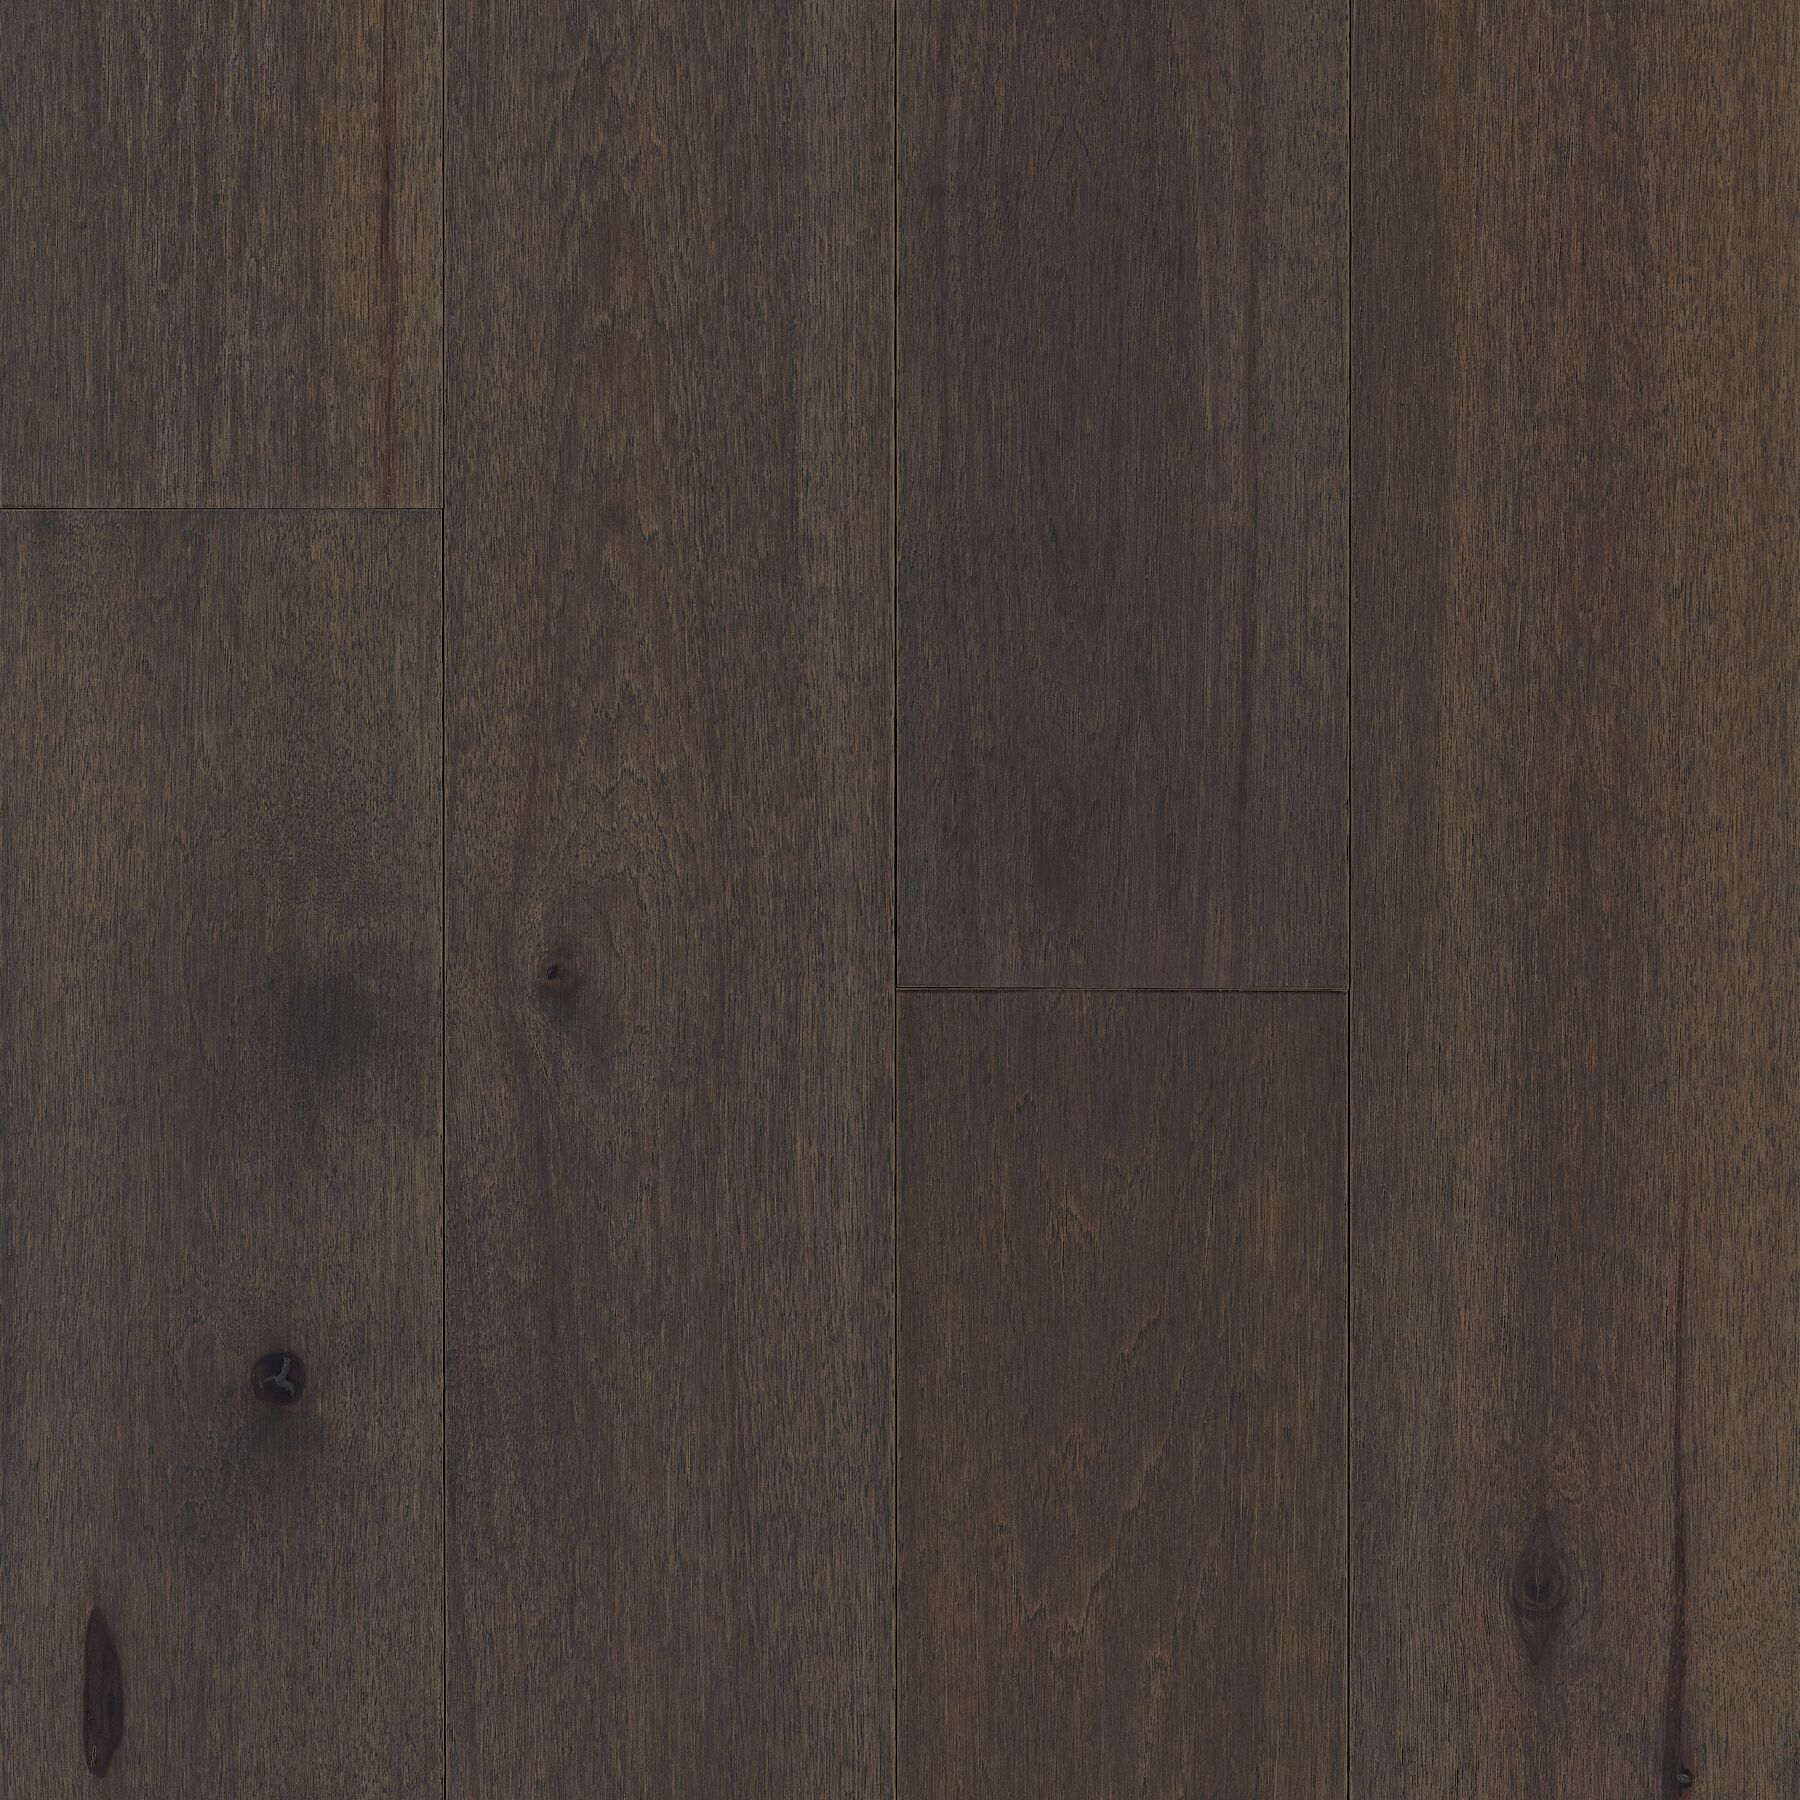 Bernese Dogwood Densified Wood Flooring with hardened wood